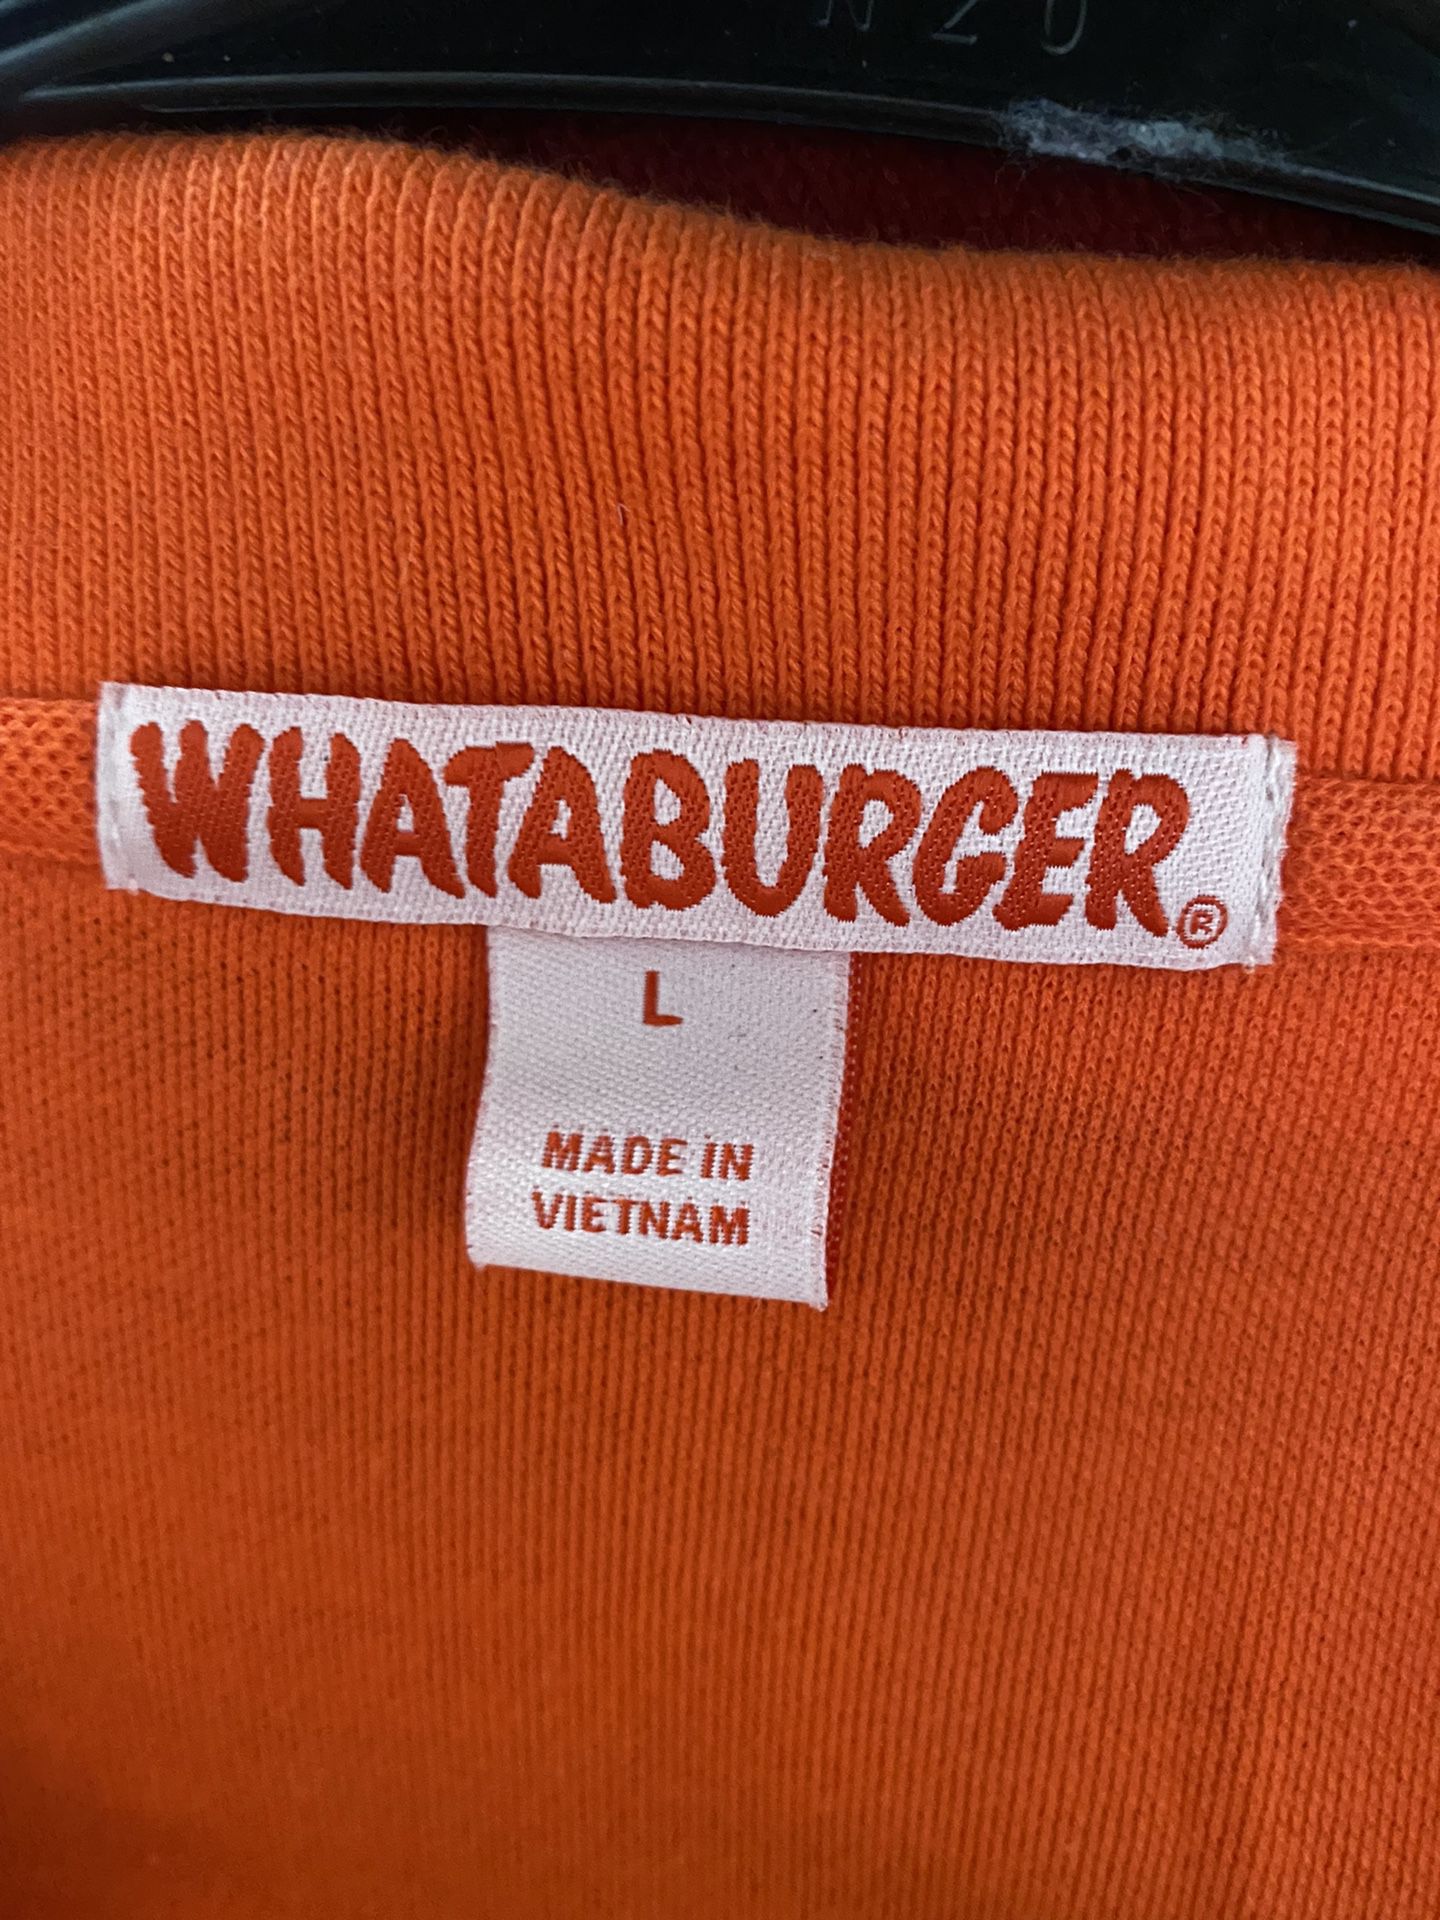 Whataburger shirt and cap practically new $12.